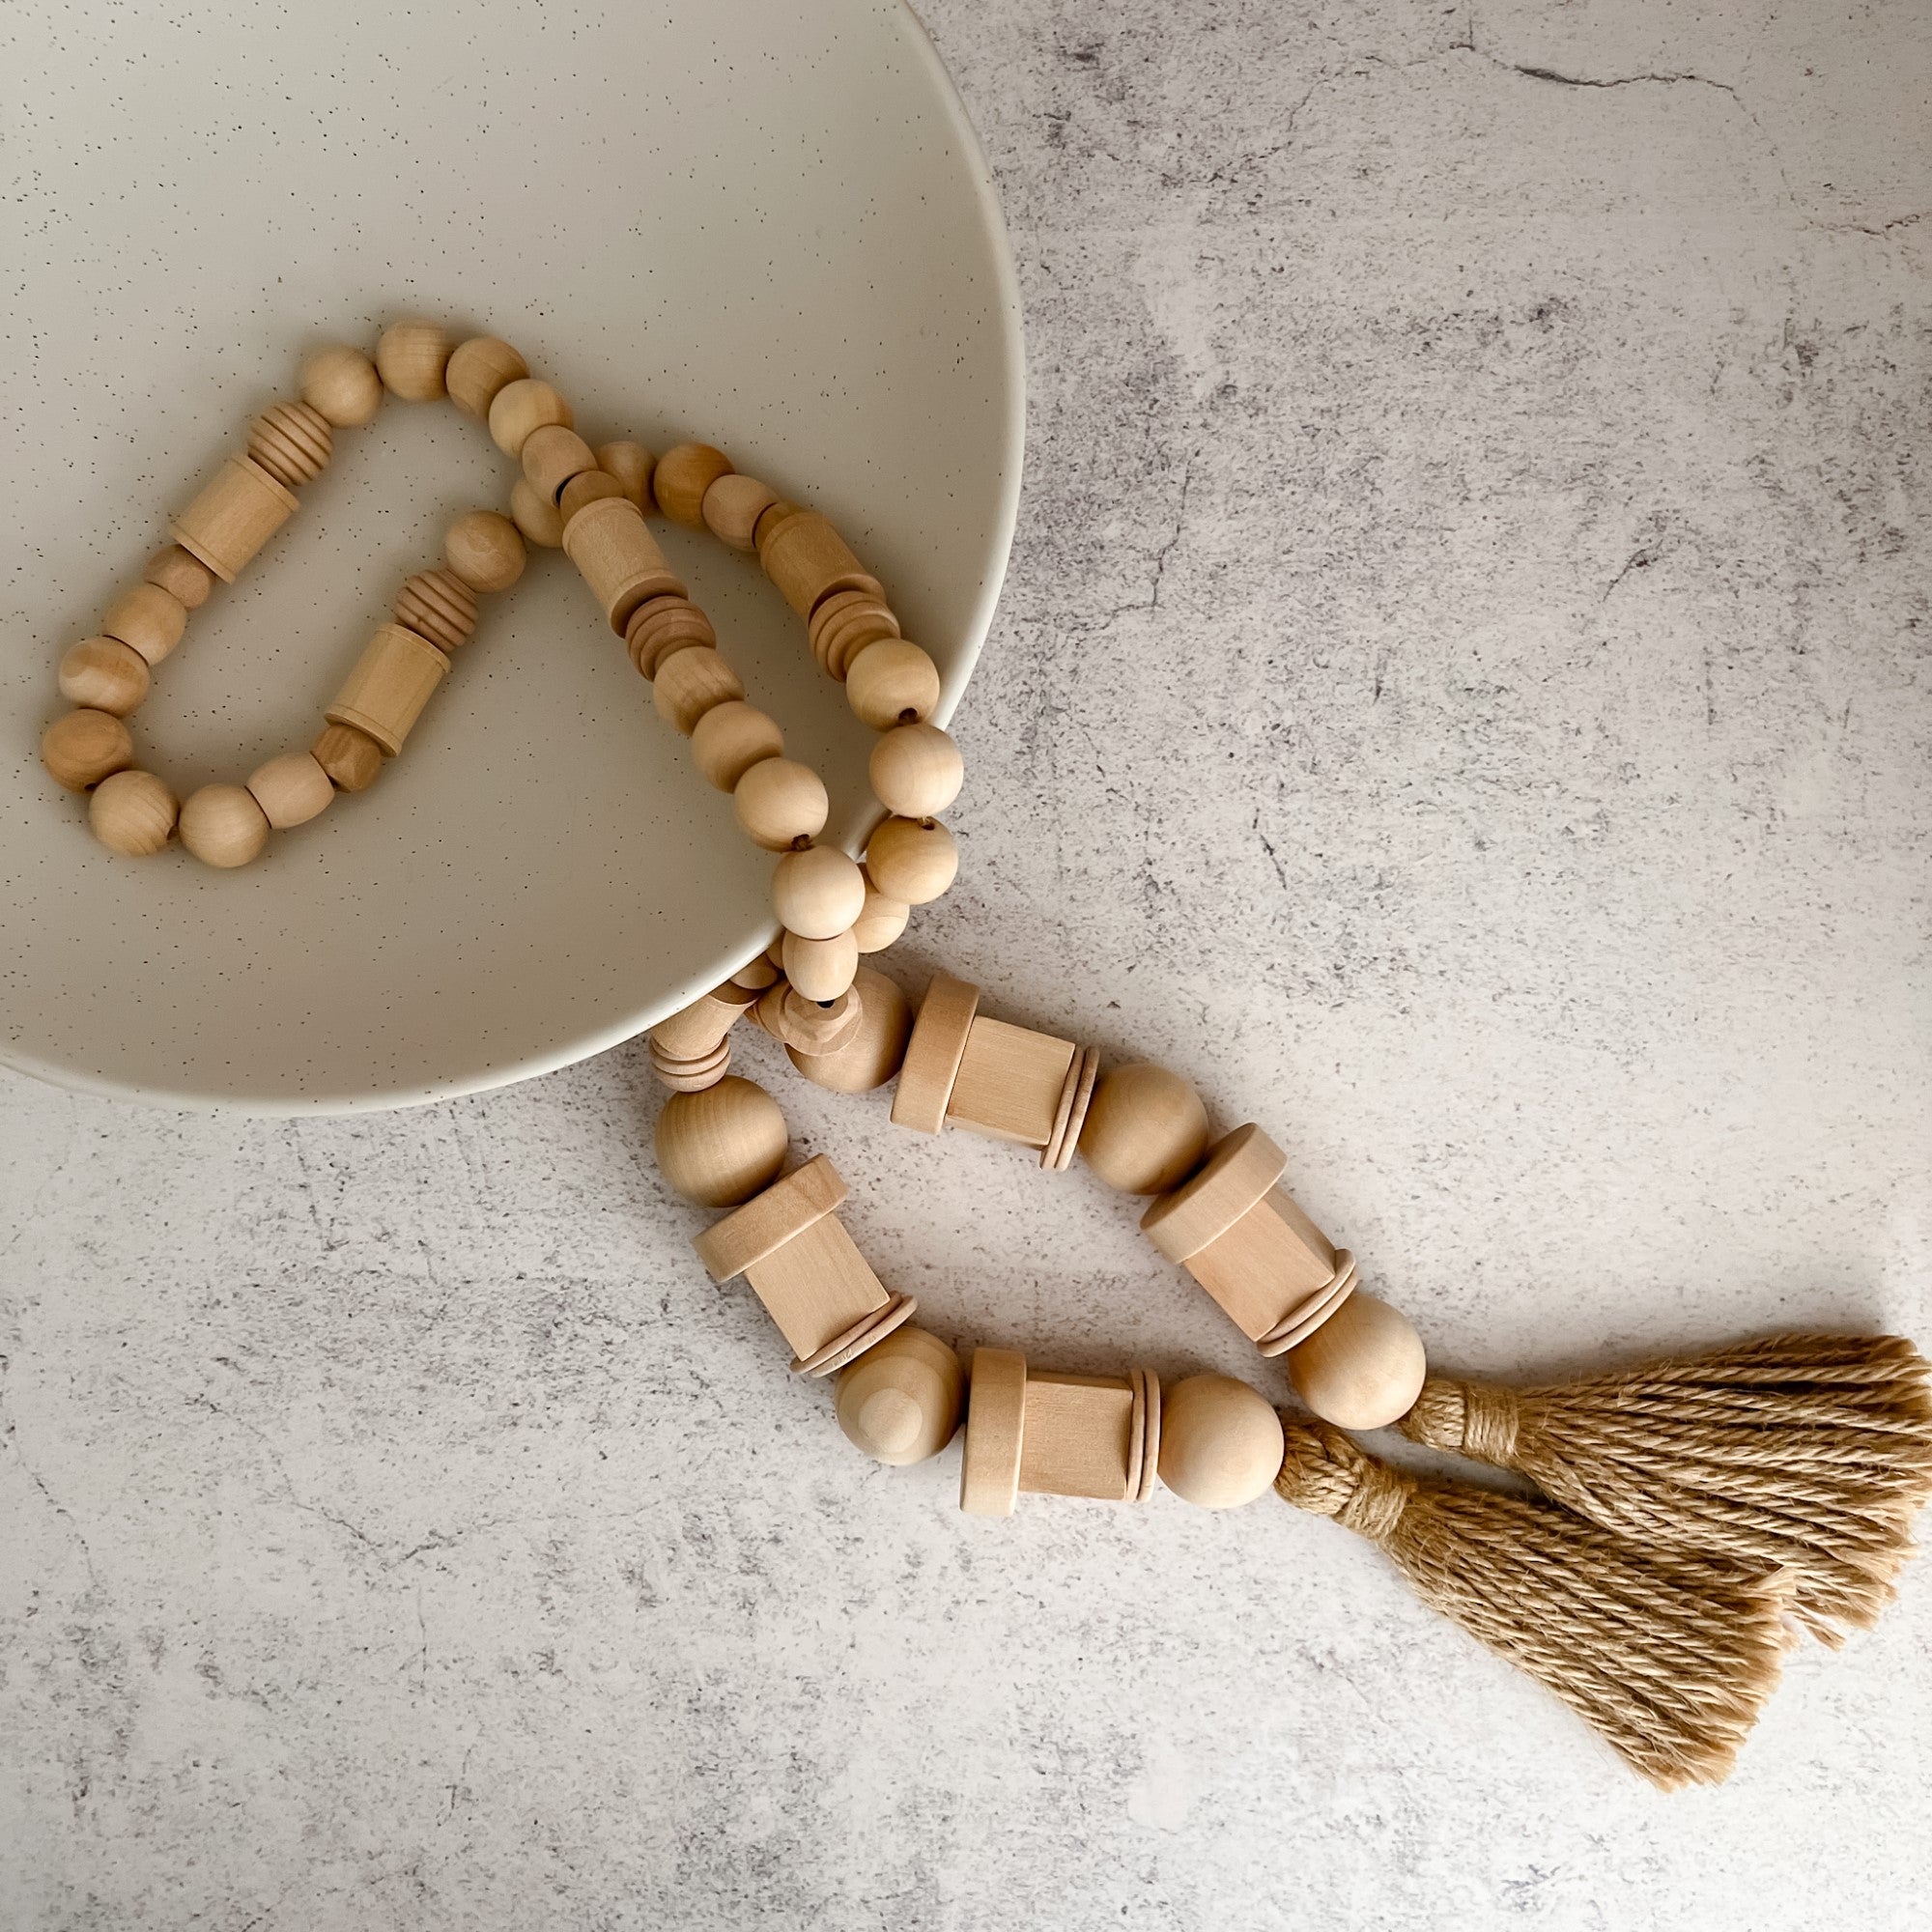 Decorative wooden bead garland